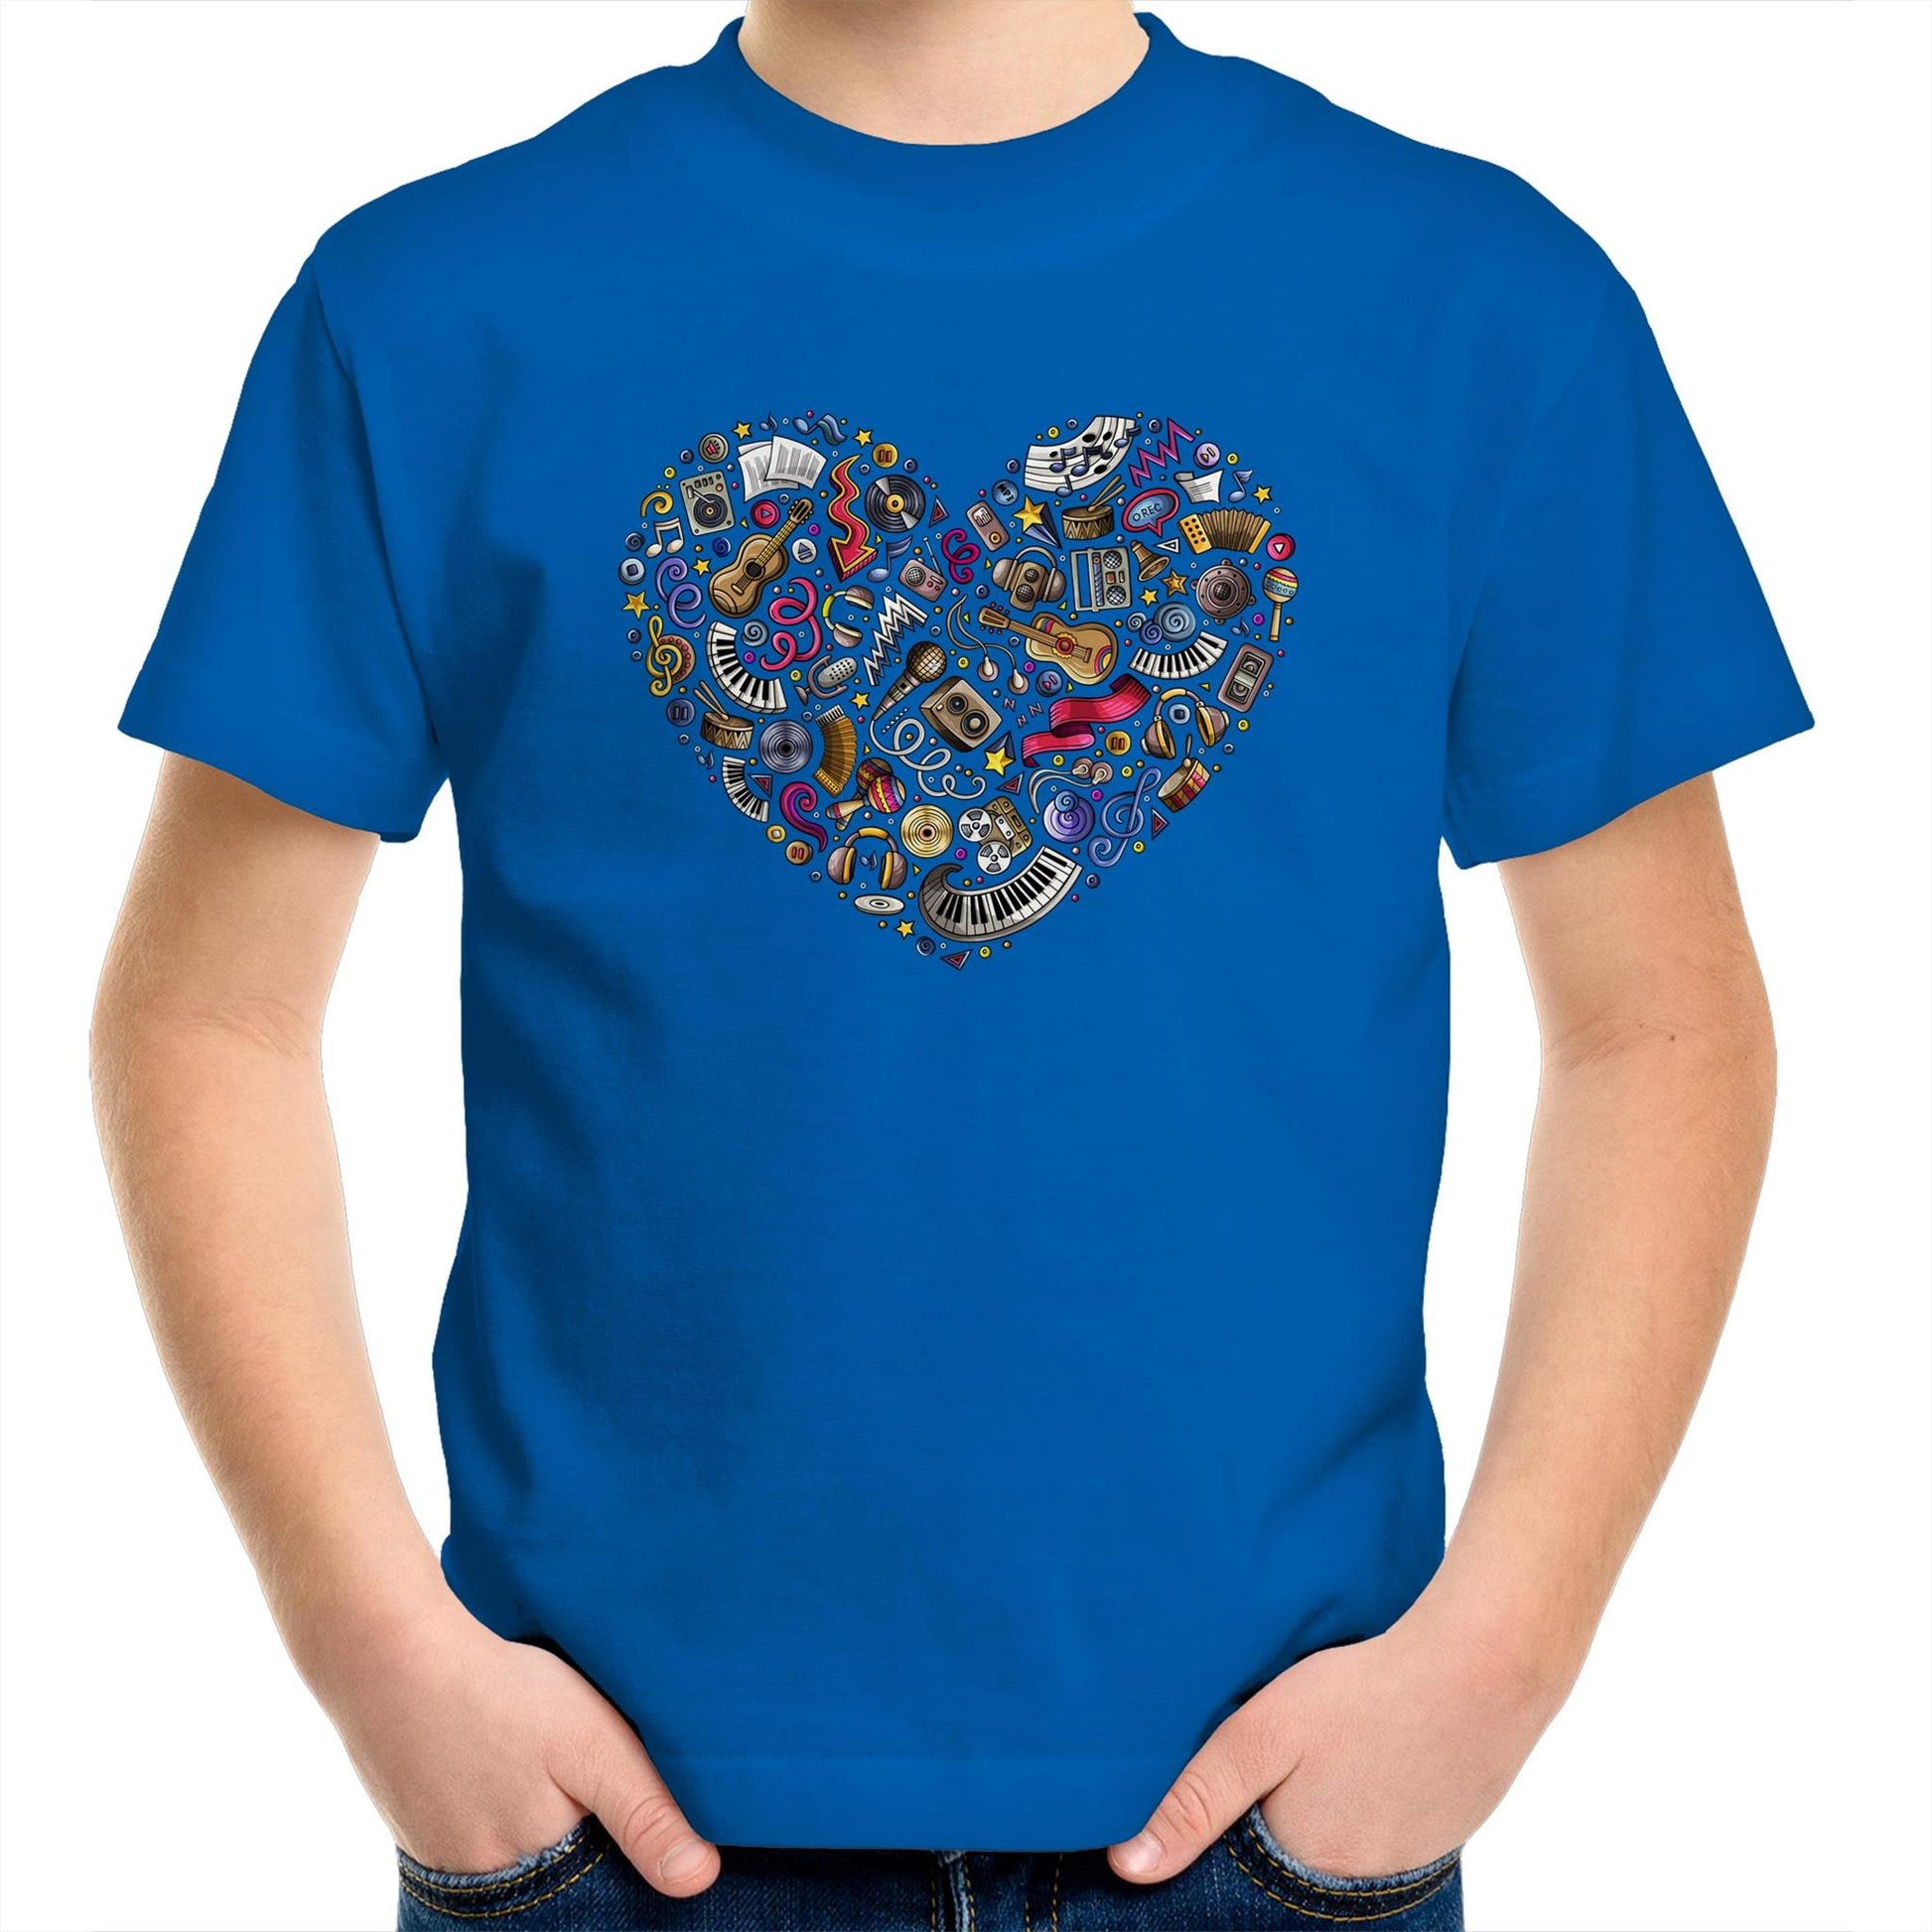 Heart Music - Kids Youth T-Shirt Bright Royal Kids Youth T-shirt Music